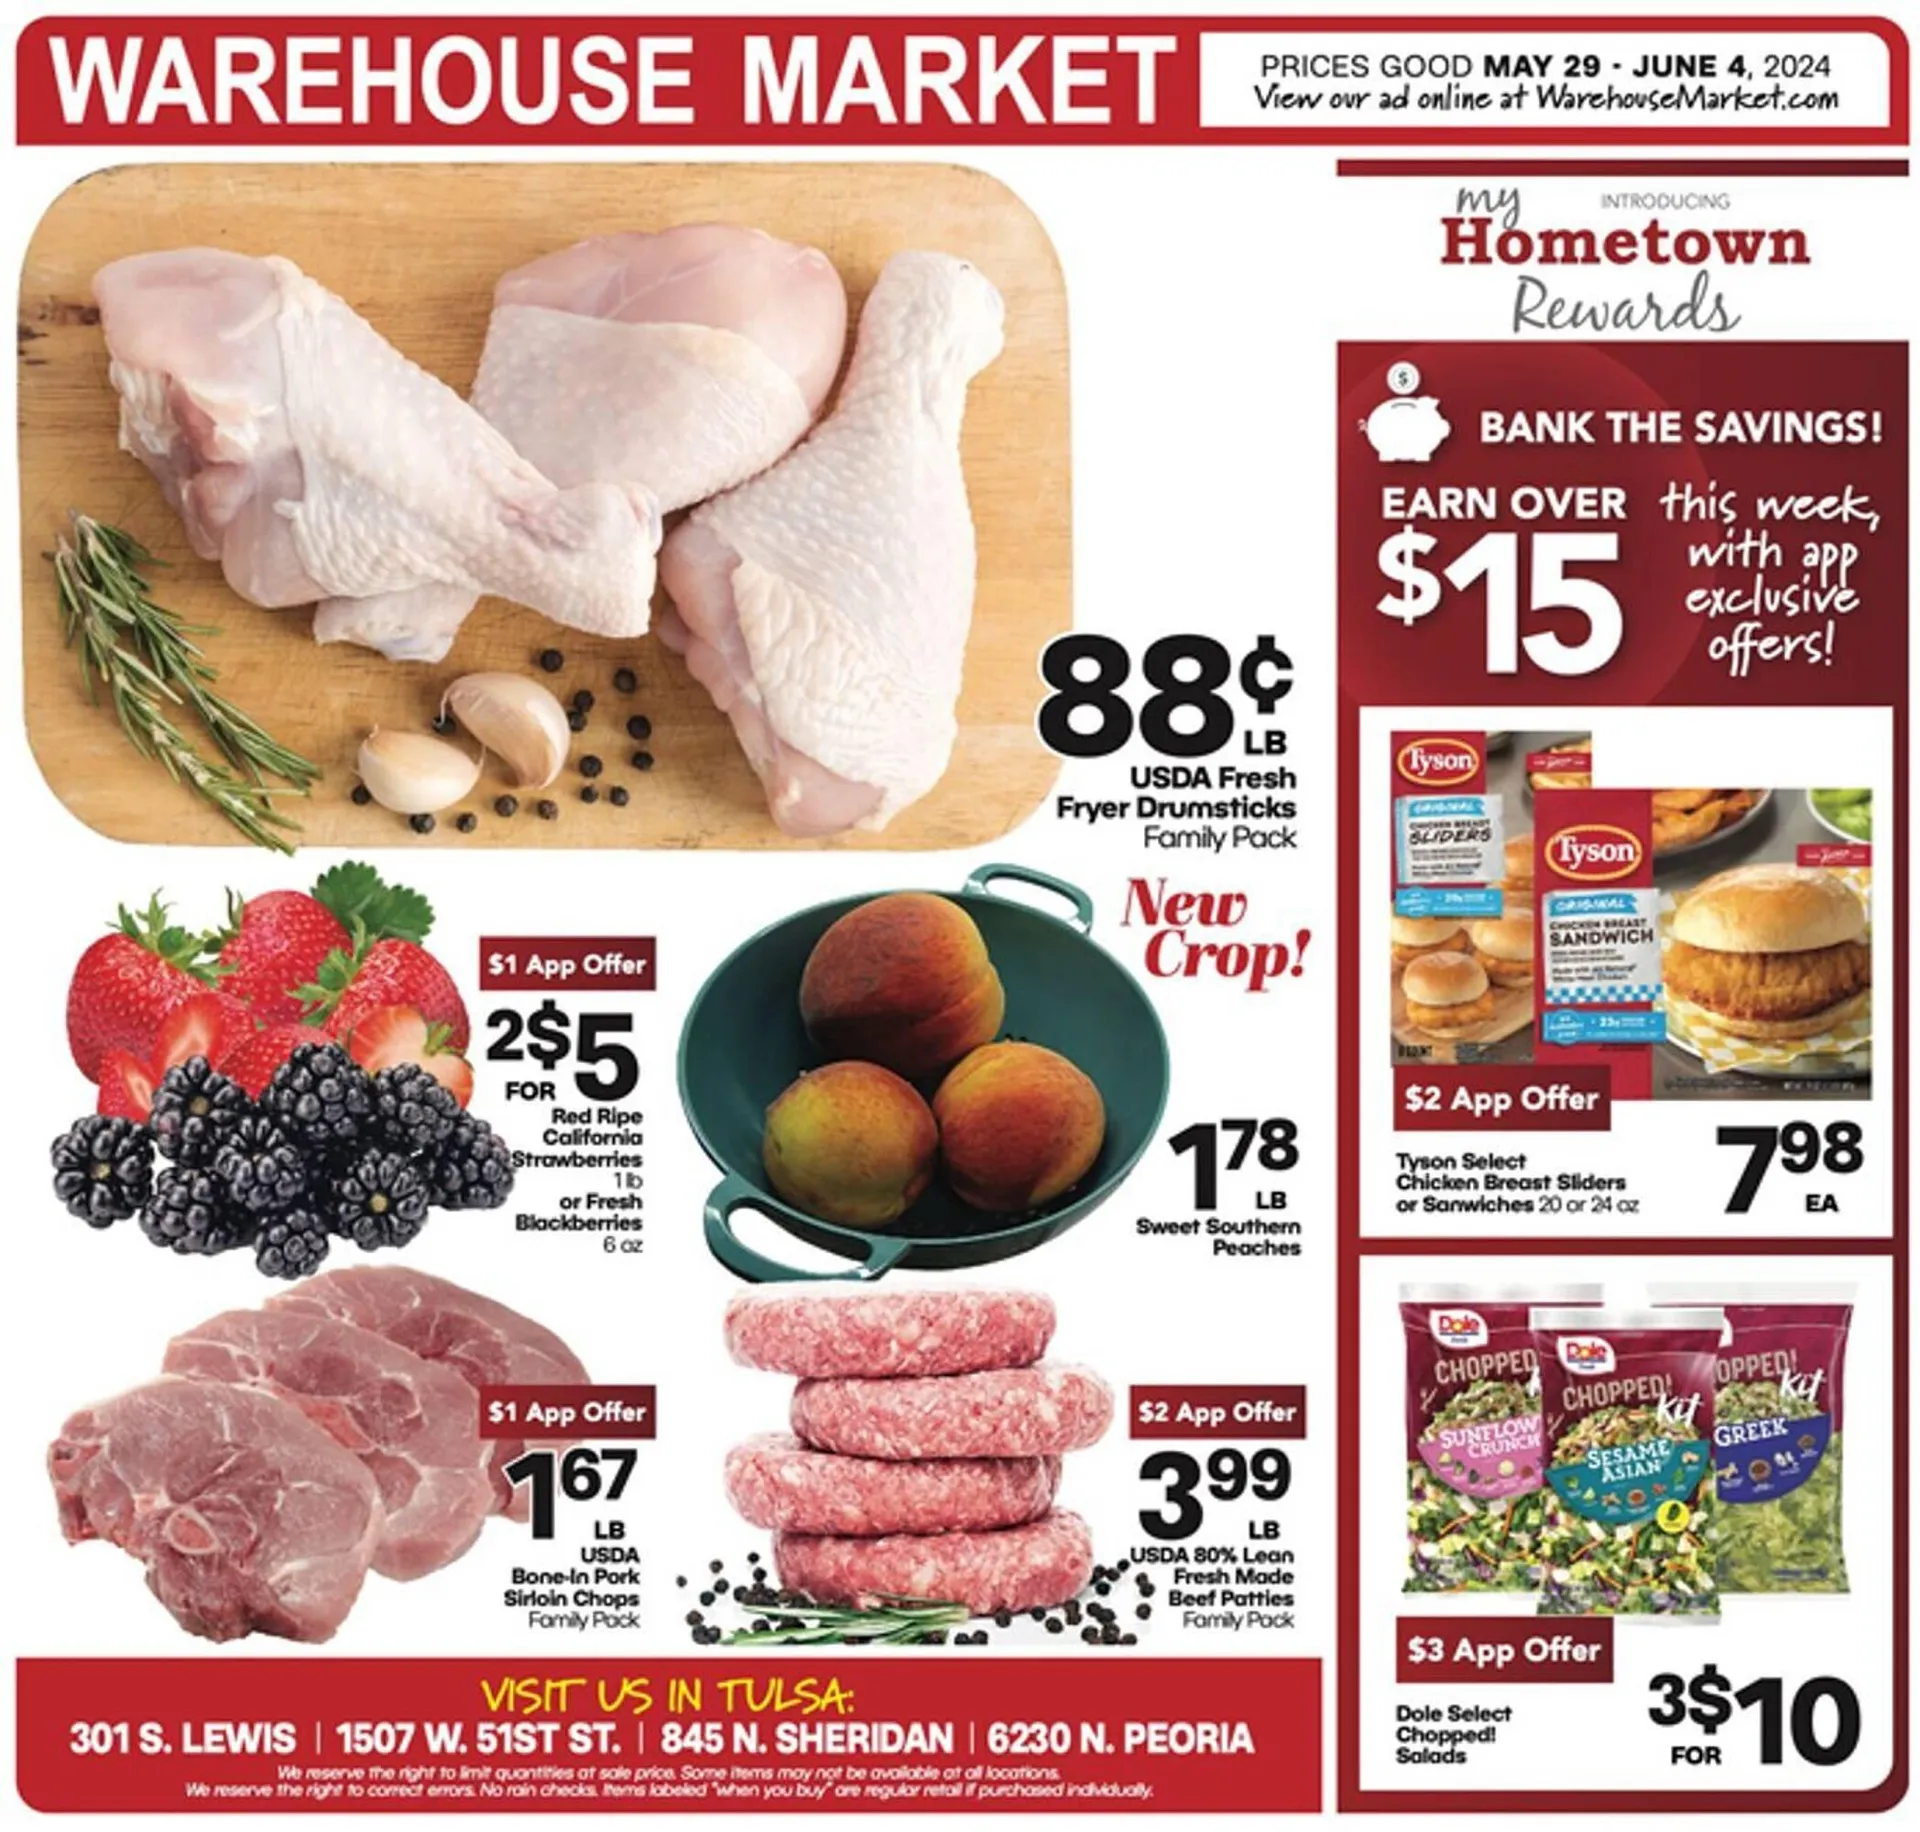 Warehouse Market Weekly Ad - 1